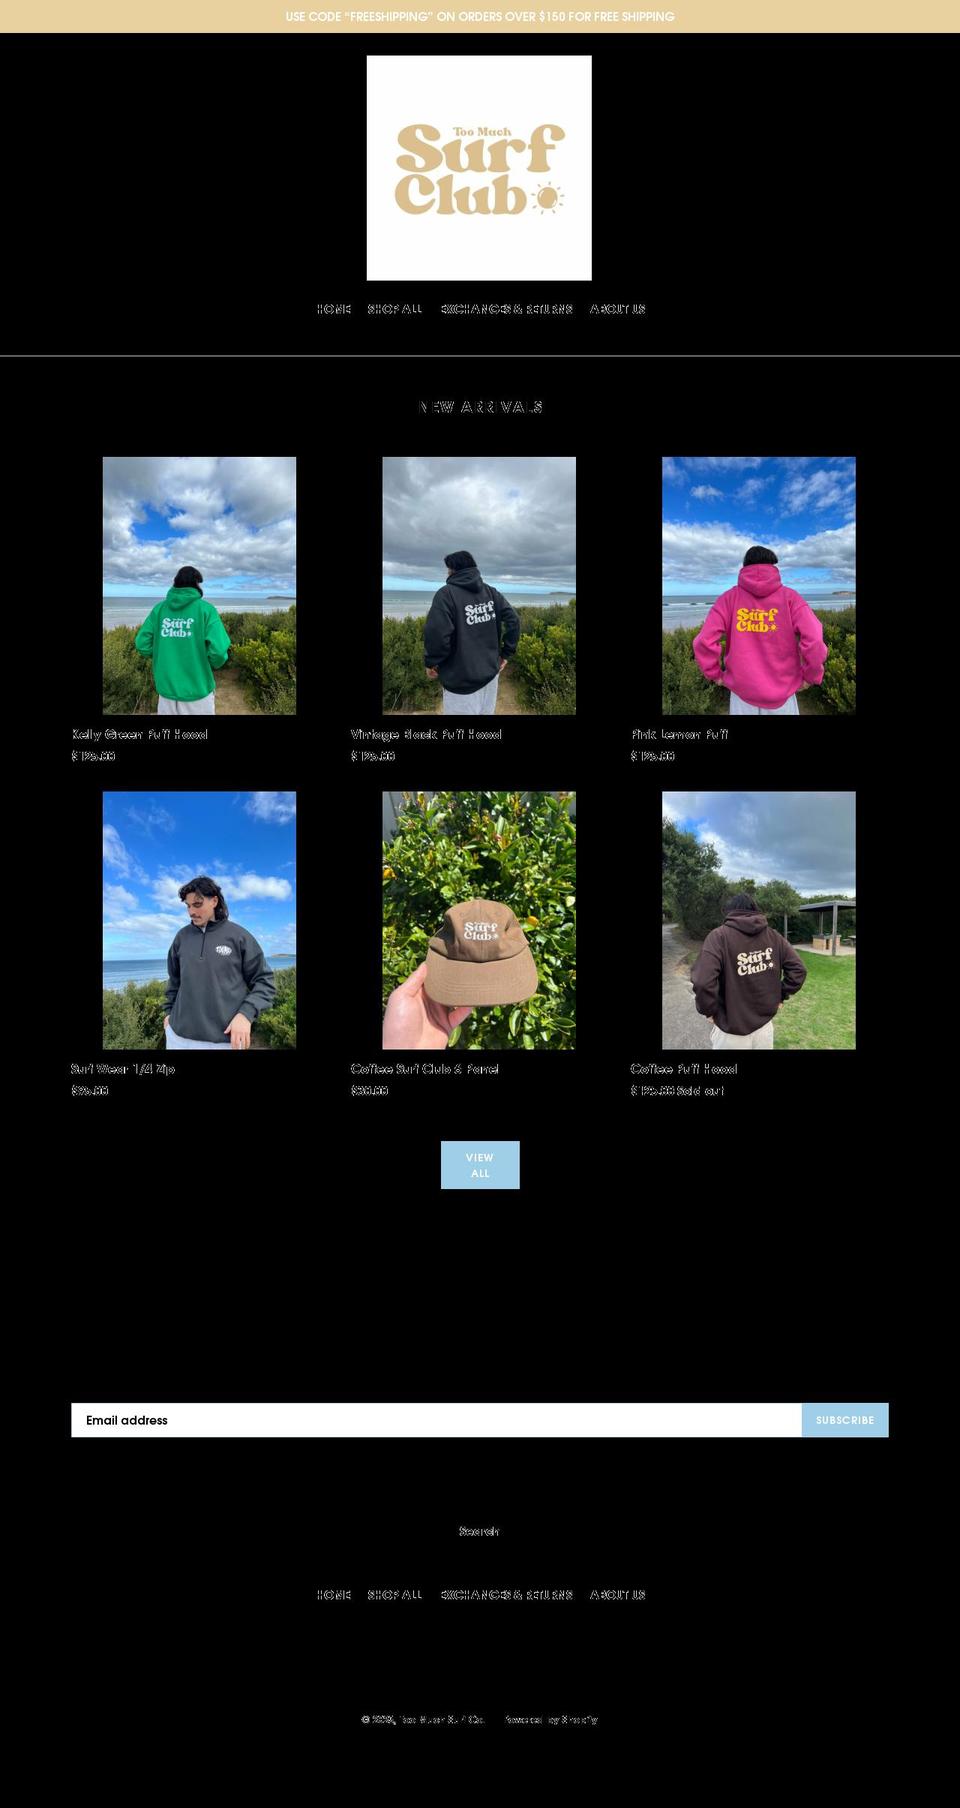 too-much-clothing-co.myshopify.com shopify website screenshot